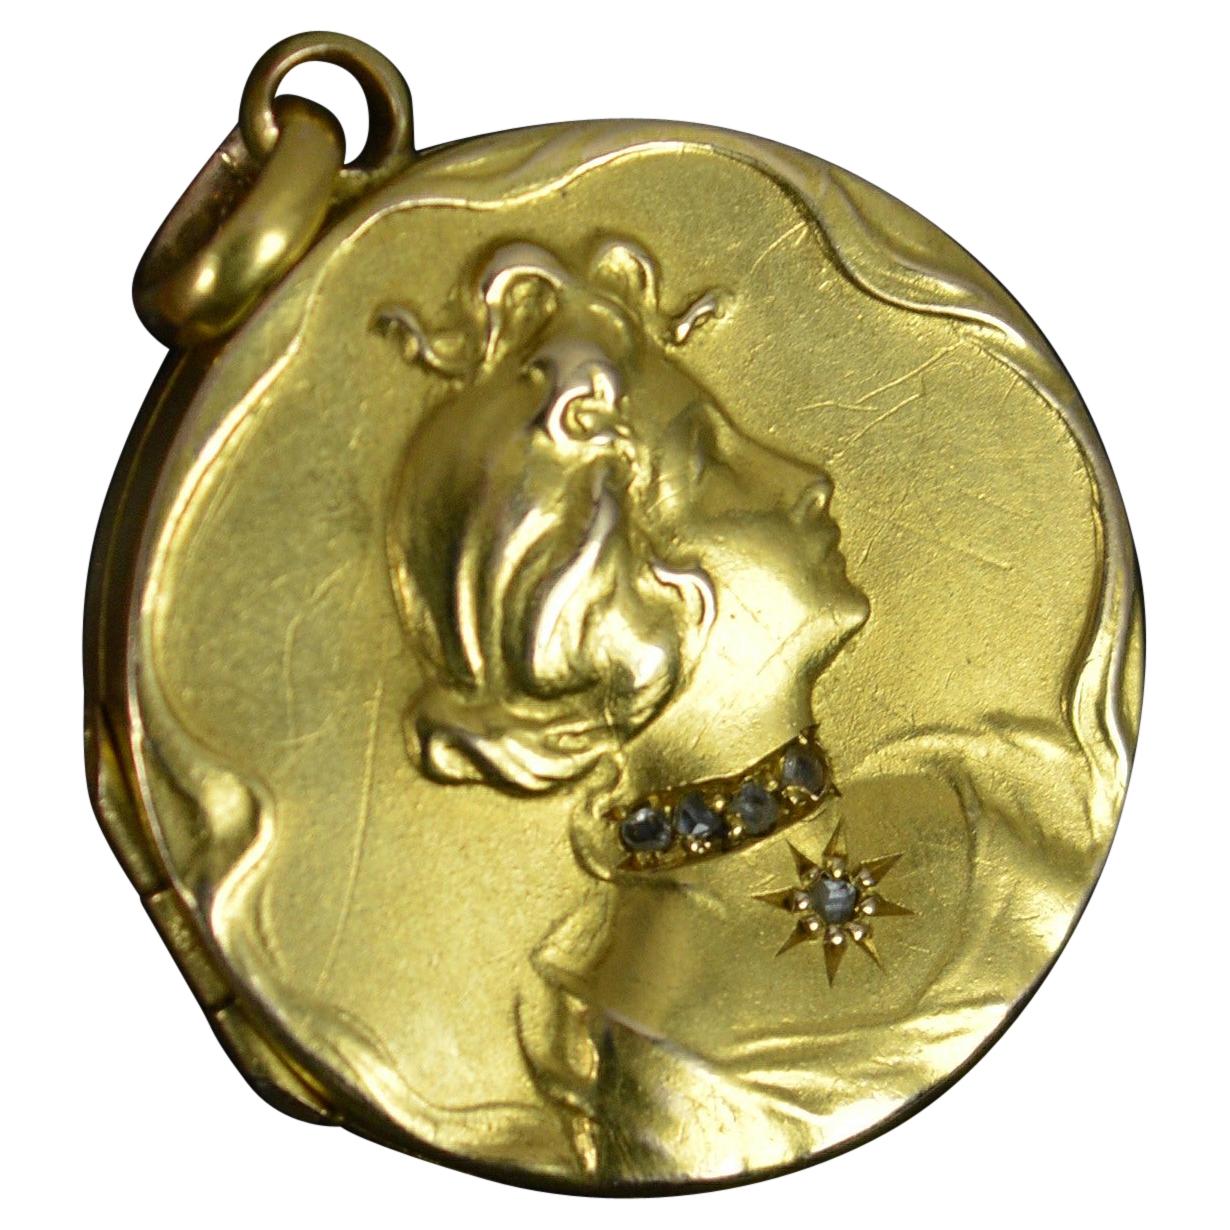 Art Nouveau 15 Carat Gold and Rose Cut Diamond Locket Pendant